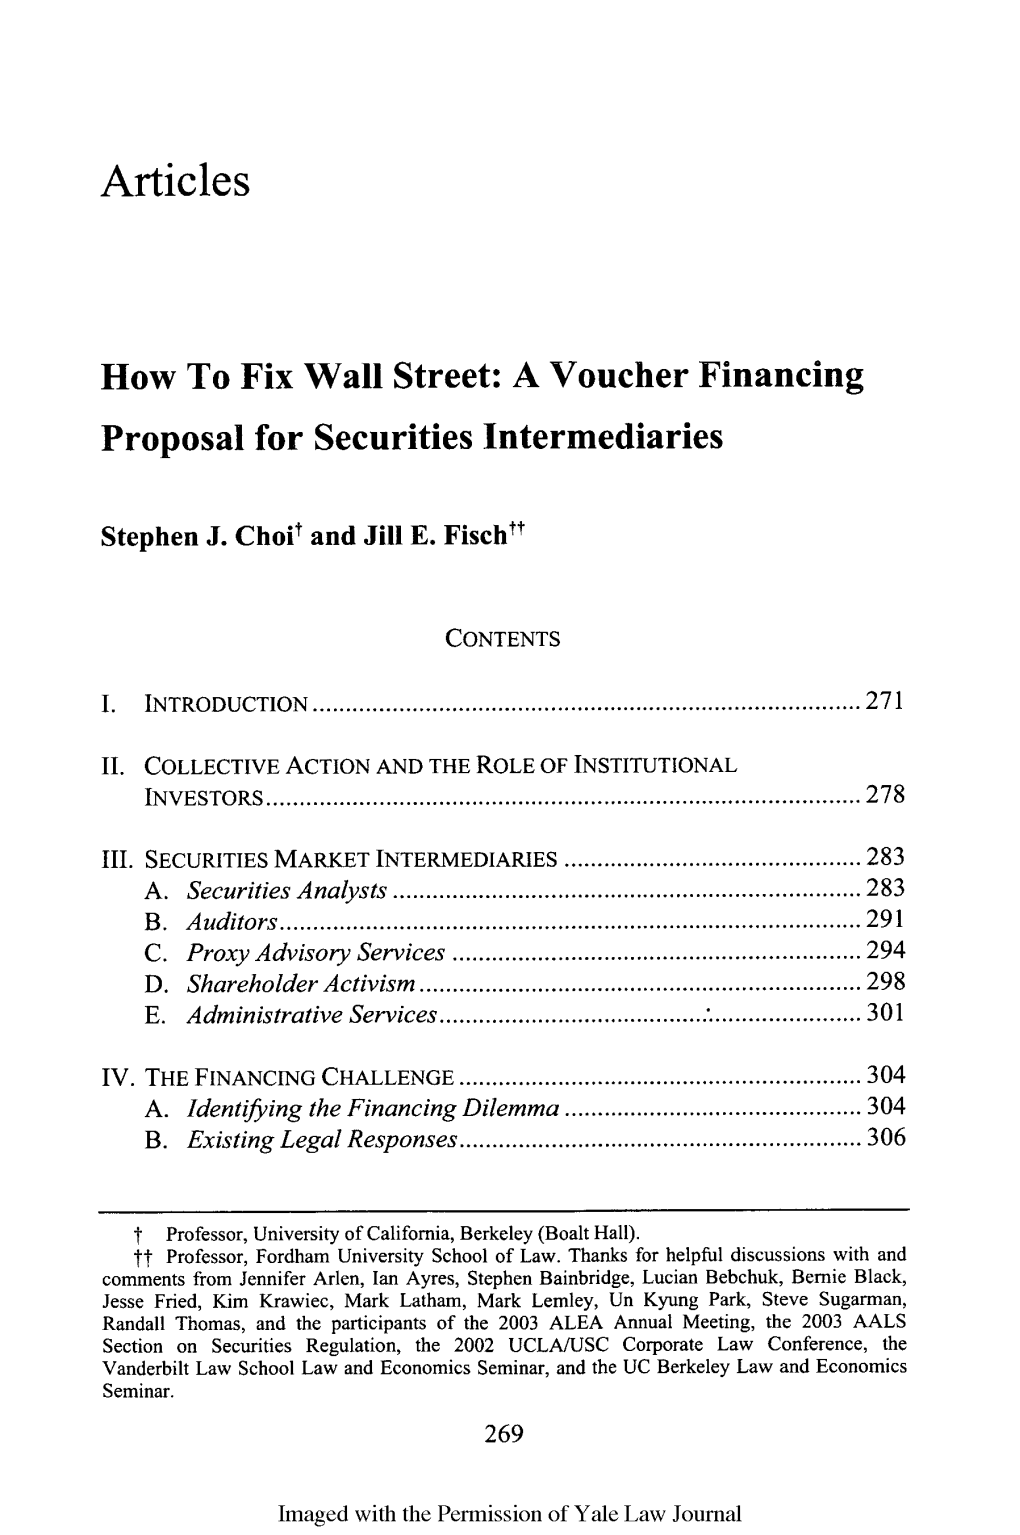 A Voucher Financing Proposal for Securities Intermediaries